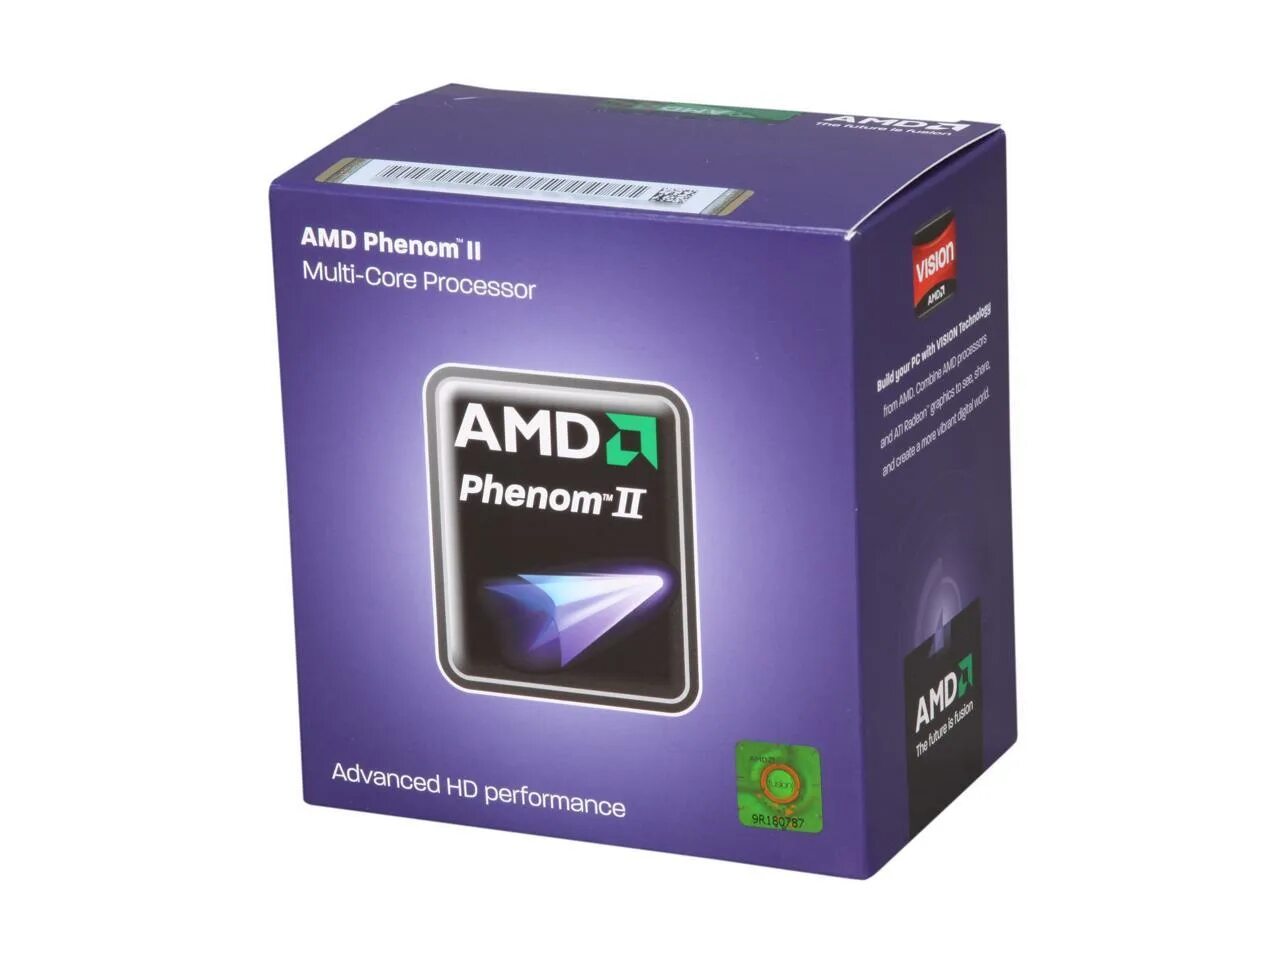 Amd phenom сравнение. AMD Phenom II x4 945. AMD Phenom x4 945 Processor. AMD Phenom II x2 550. AMD Phenom TM 2 x2 550.